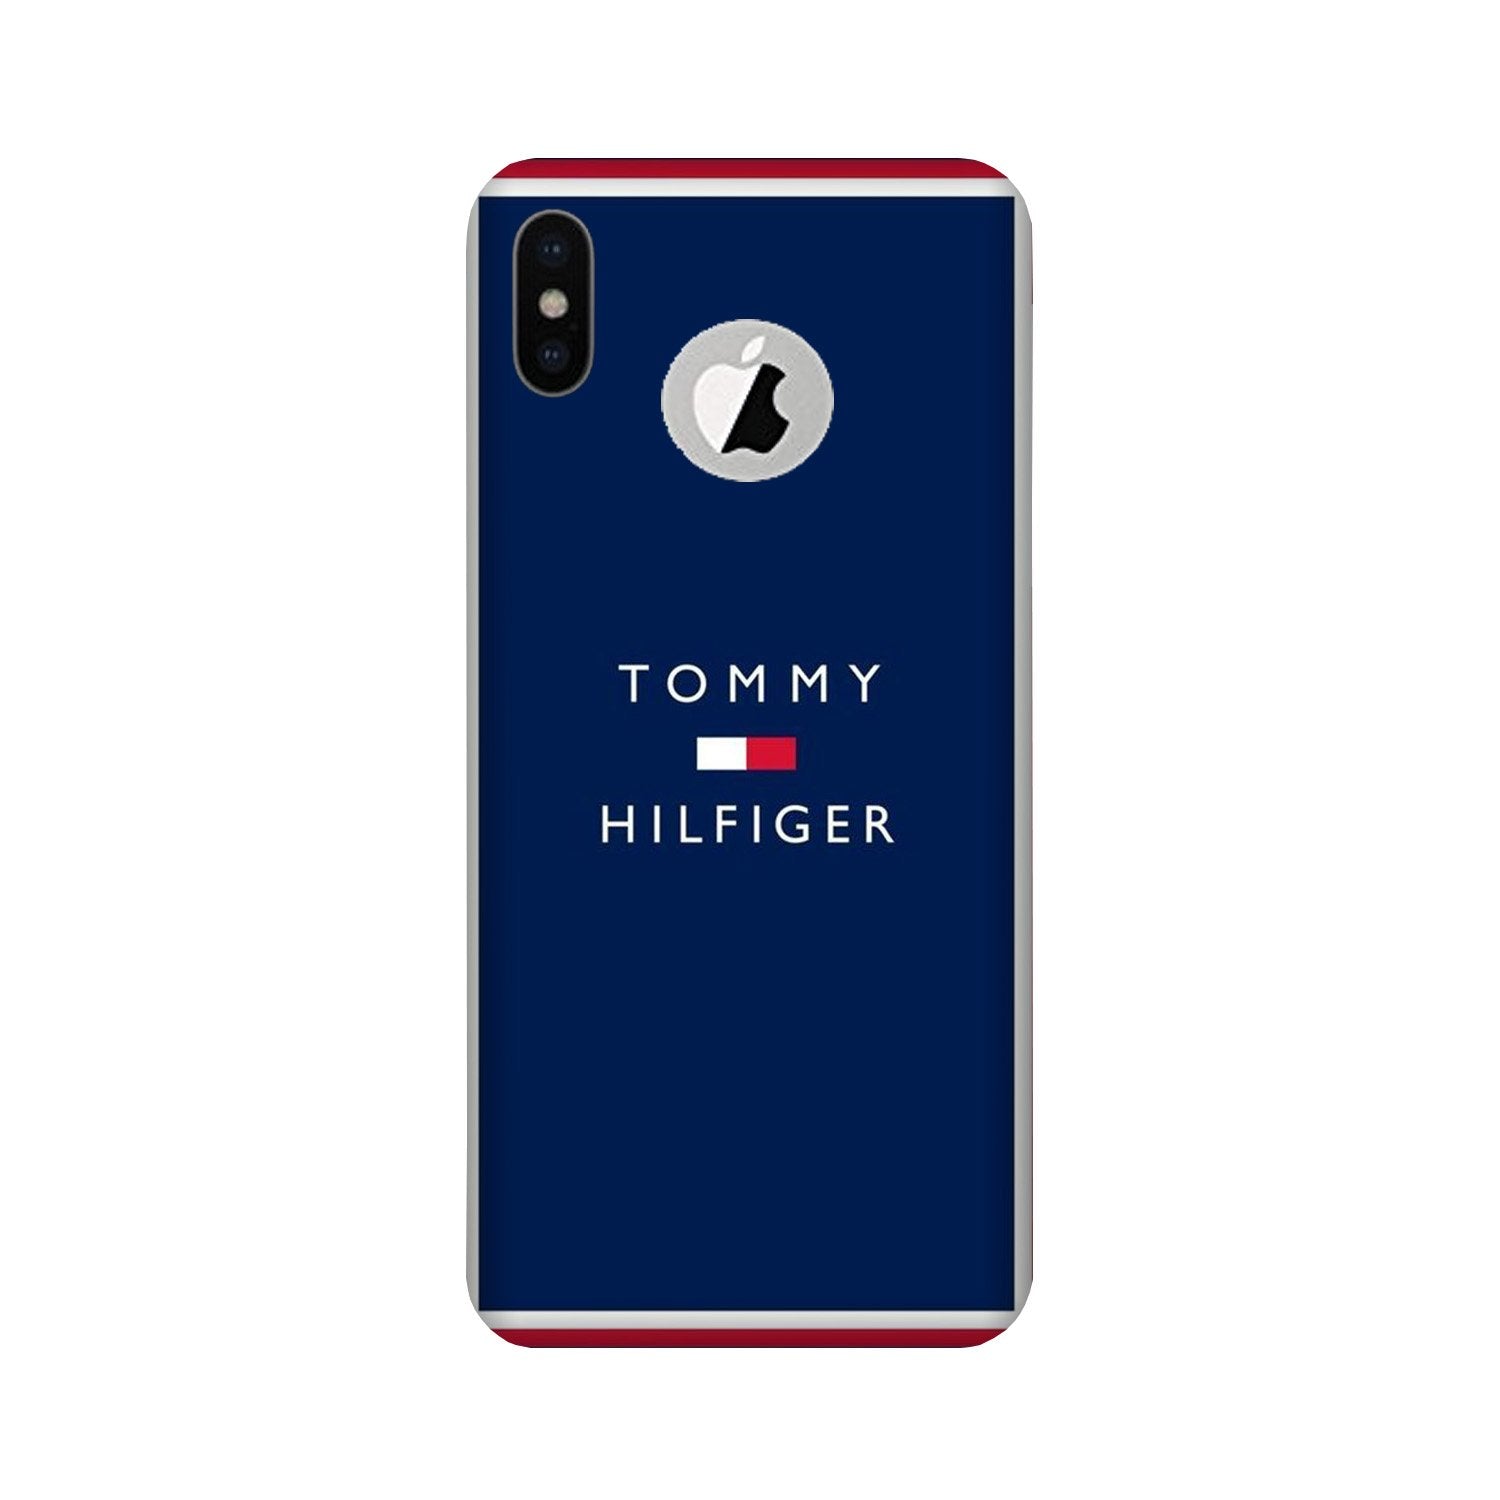 Tommy Hilfiger Case for iPhone X logo cut (Design No. 275)